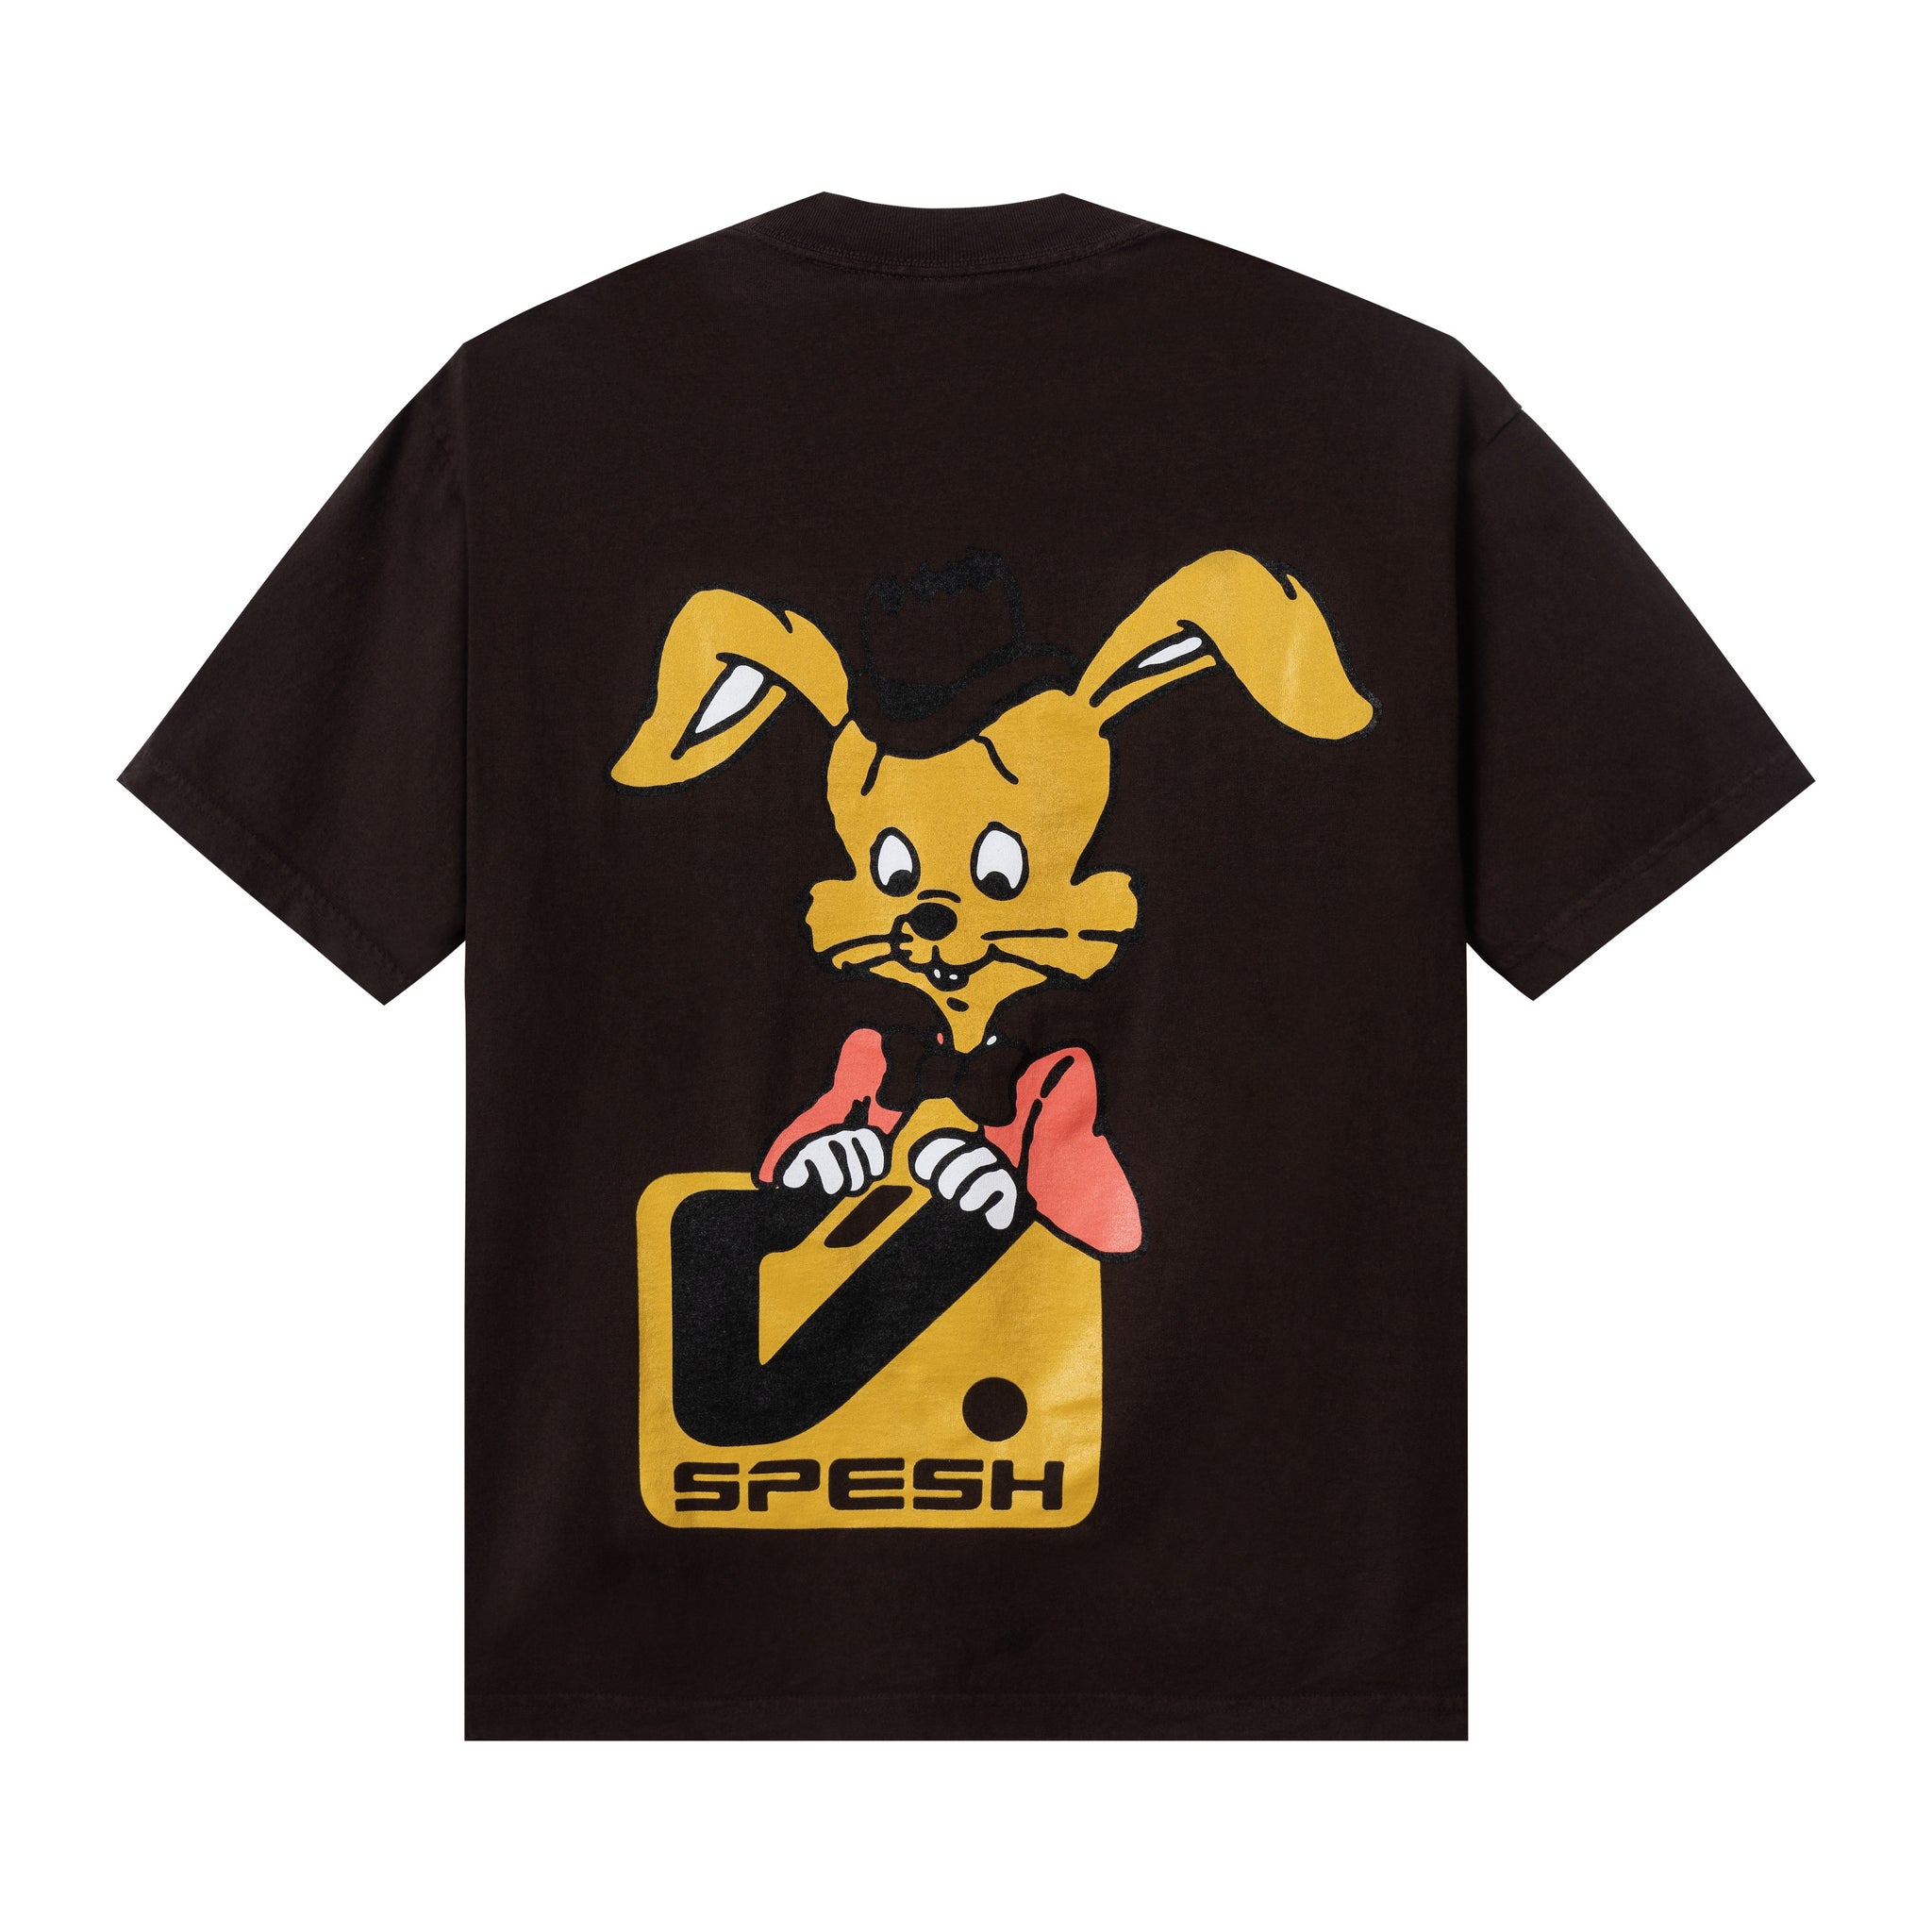 V. Spesh T-Shirt